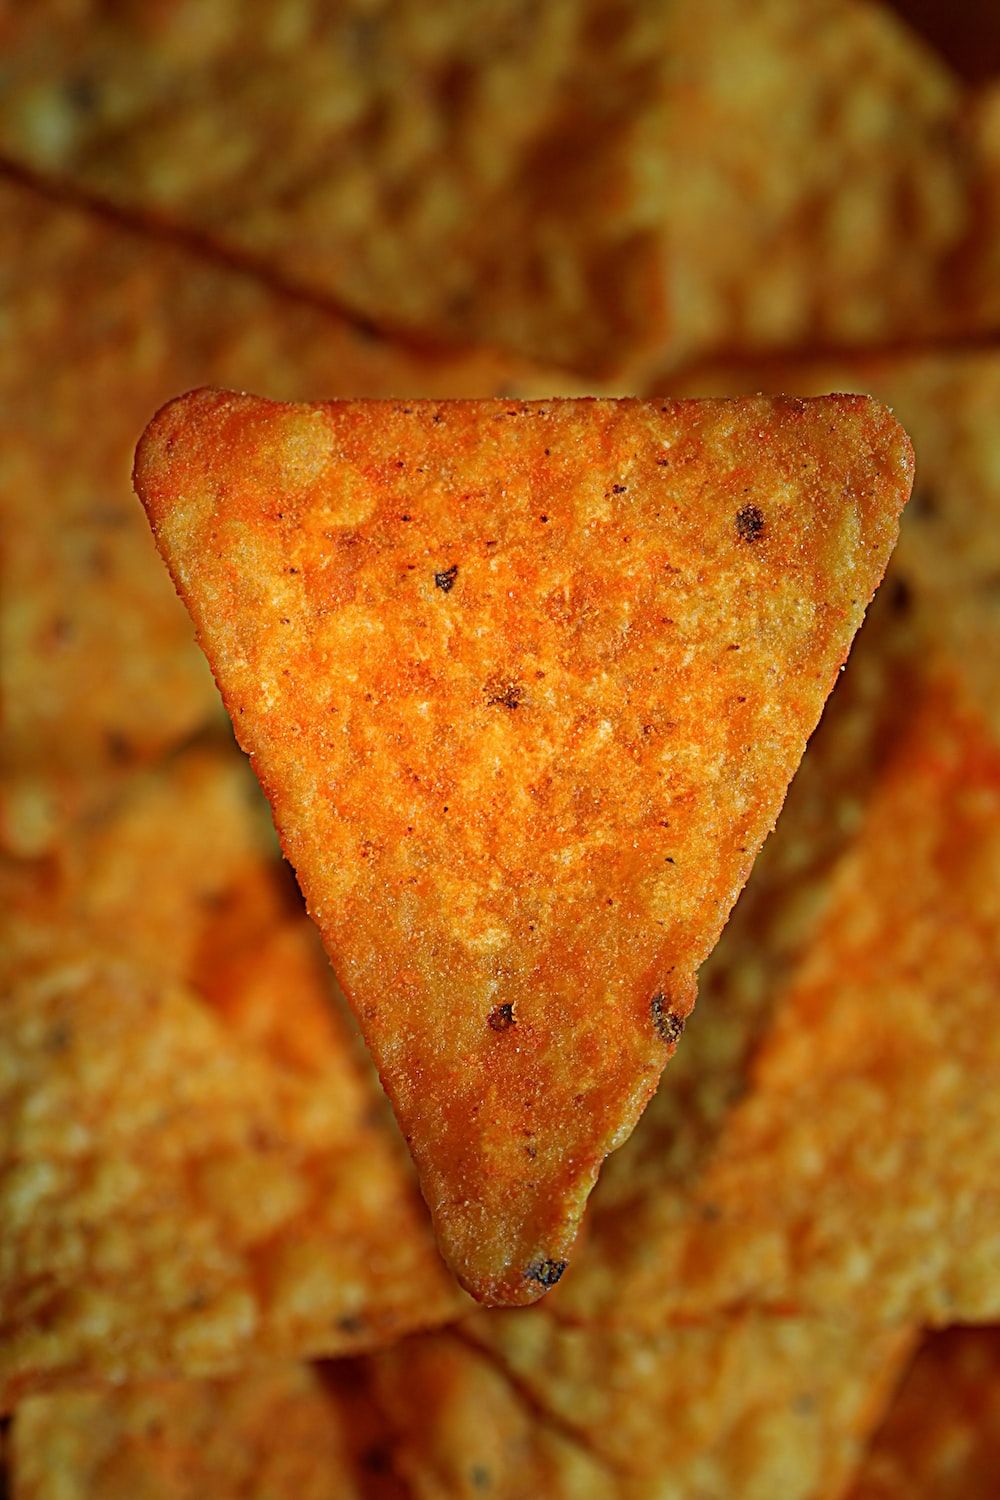 A close up of some tortilla chips - Doritos